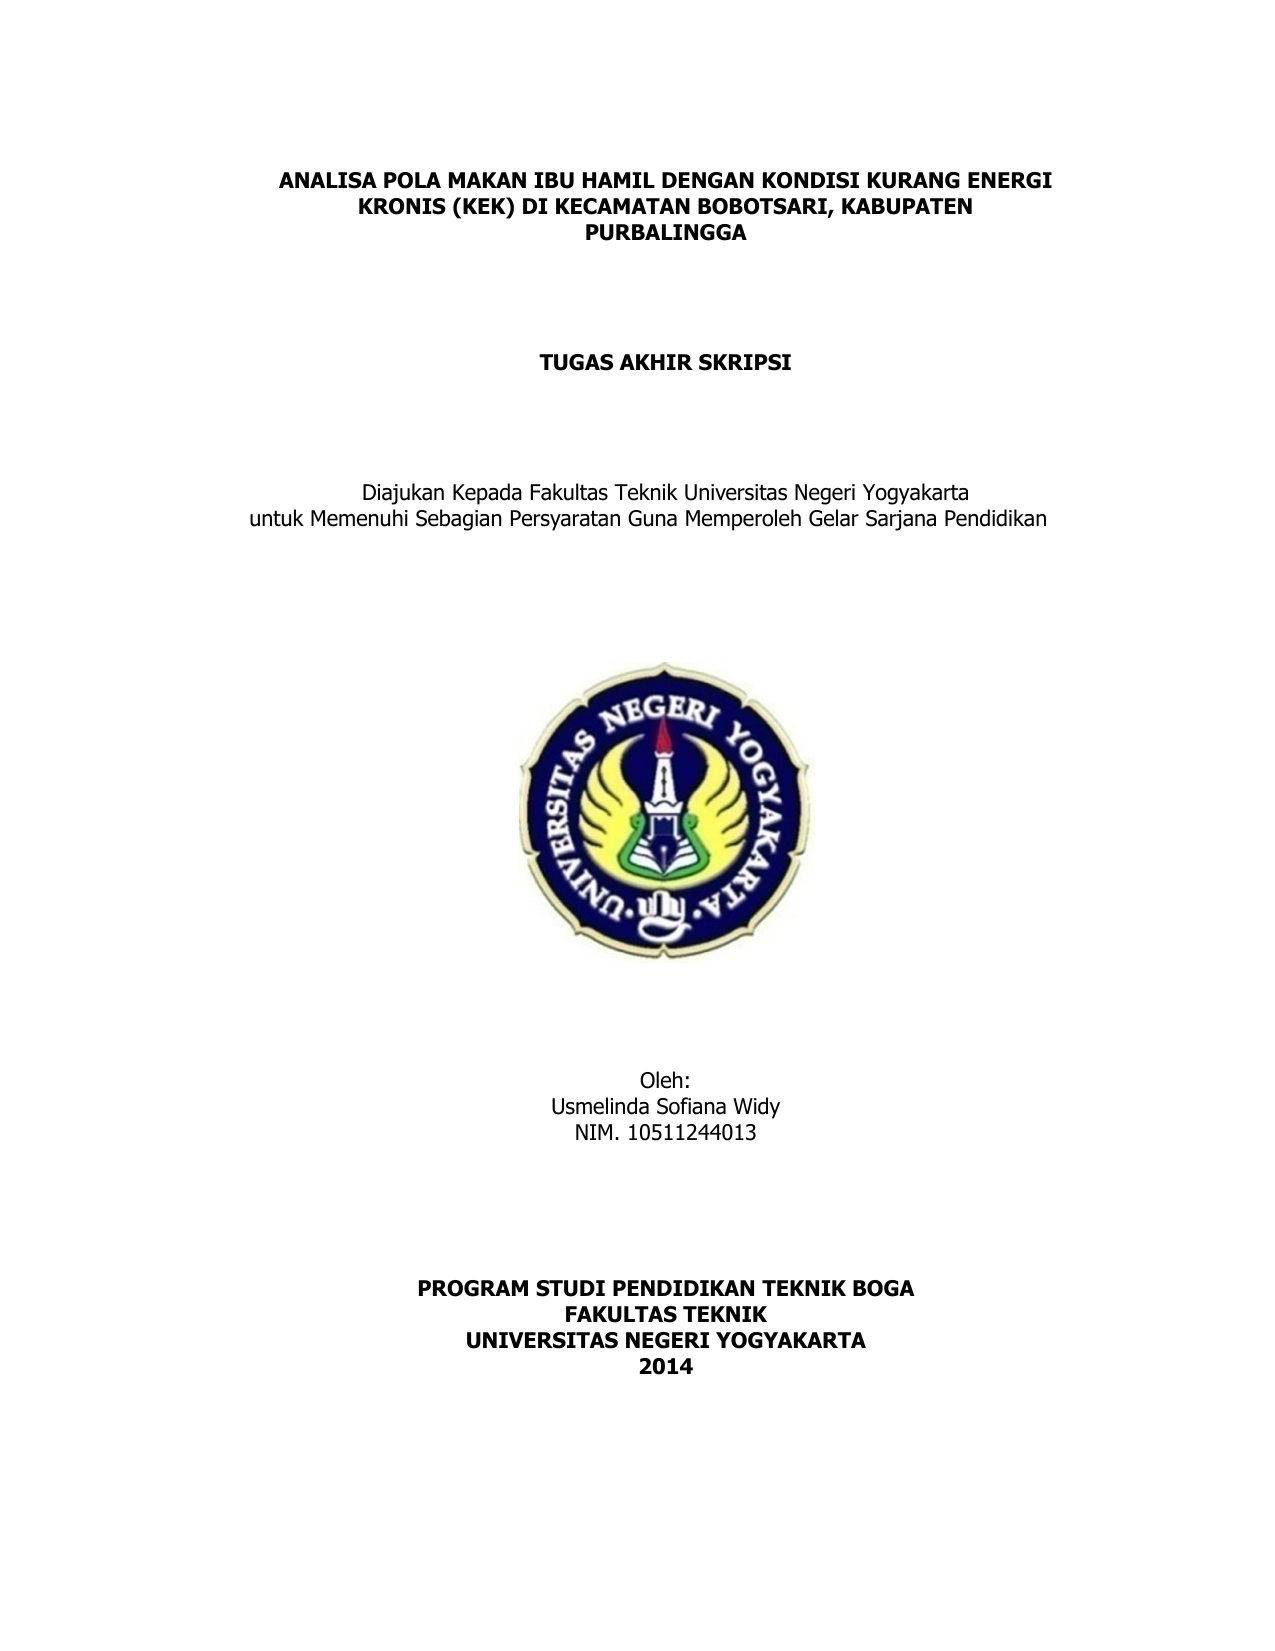 KABUPATEN PURBALINGGA TUGAS AKHIR SKRIPSI Diajukan Kepada Fakultas Teknik Universitas Negeri Yogyakarta untuk Memenuhi Sebagian Persyaratan Guna